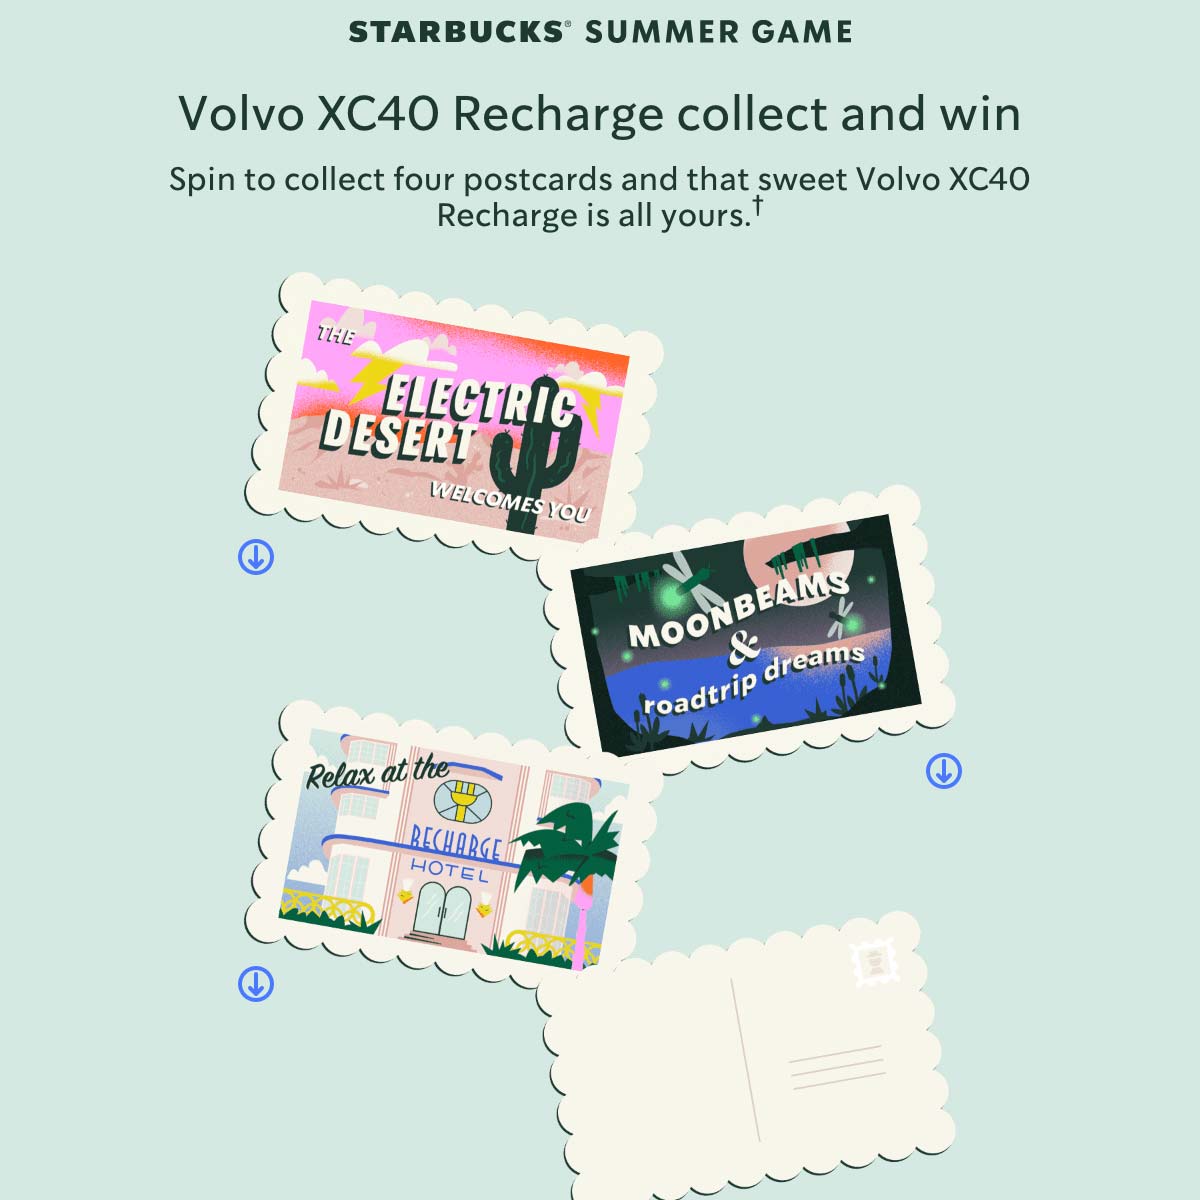 Starbucks Summer Game ansichtkaarten spelstukken.